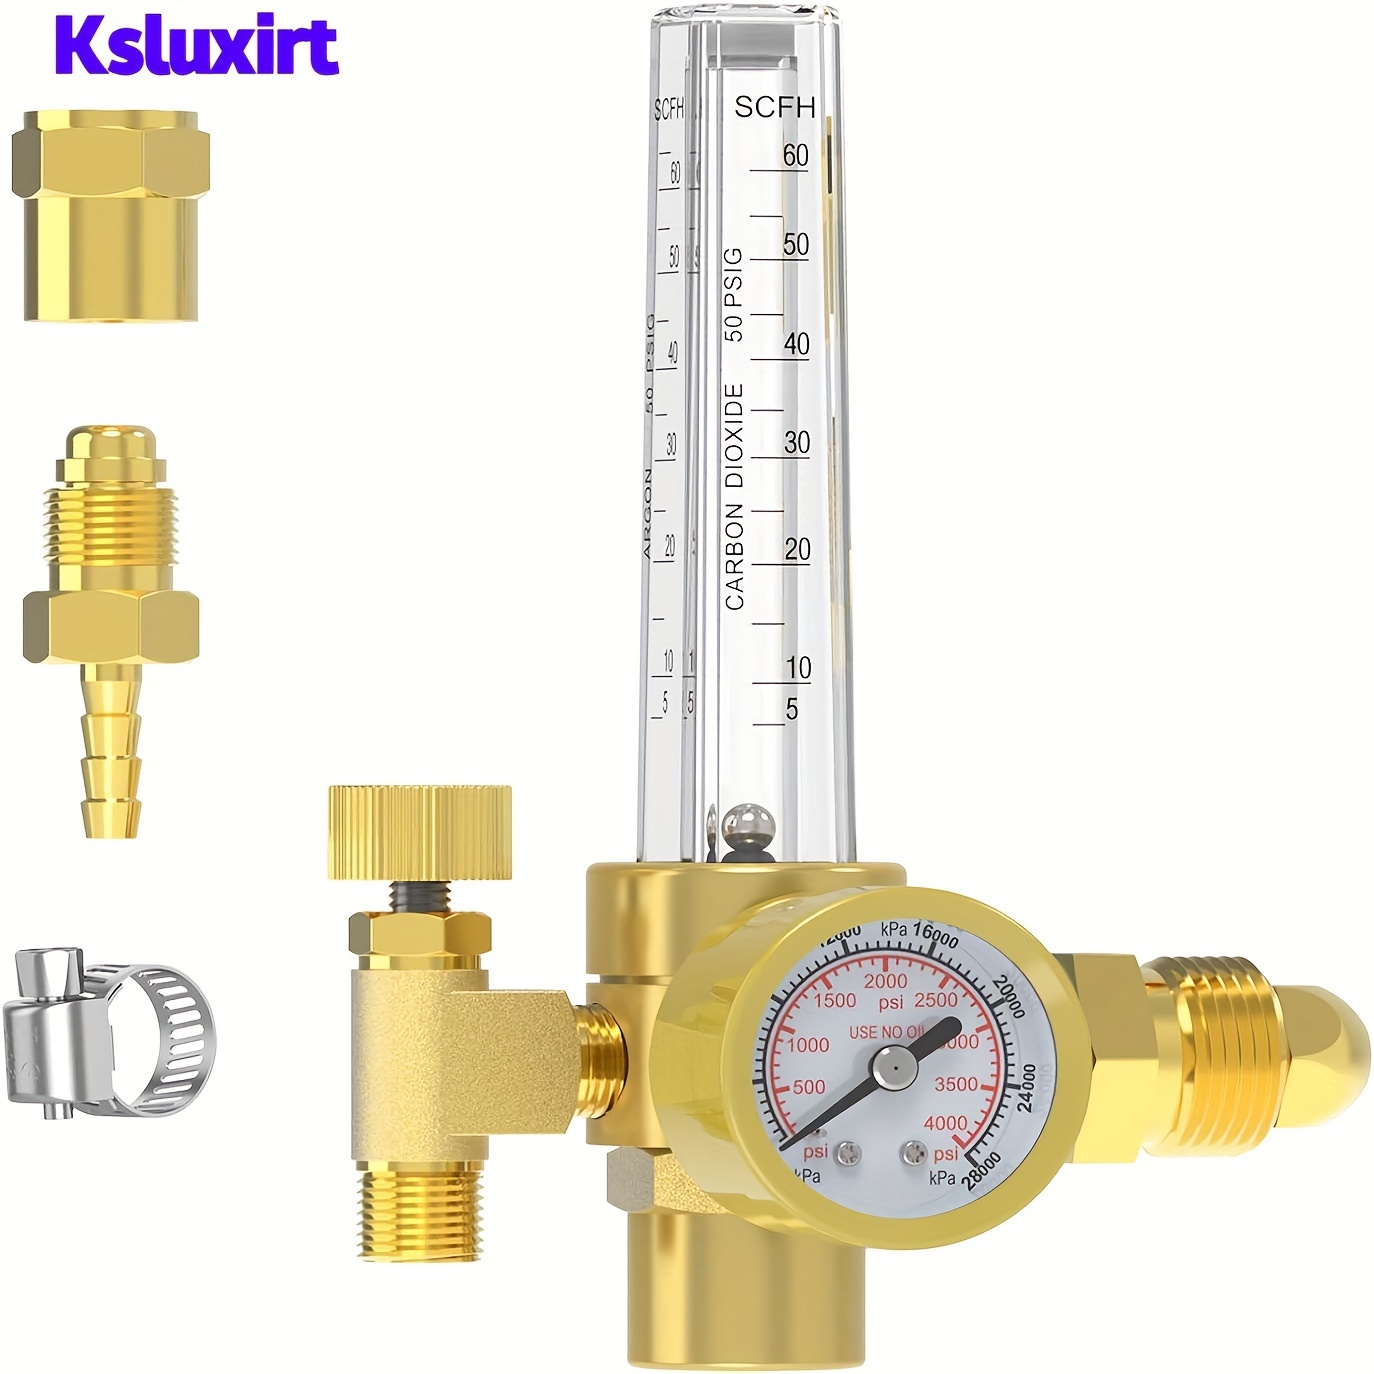 

Ksluxirt Precision & Co2 Gas Welding Regulator - 0-4000 Psi, Adjustable Flowmeter 10-60cfh, Copper Construction For Mig Tig Helium Nitrogen